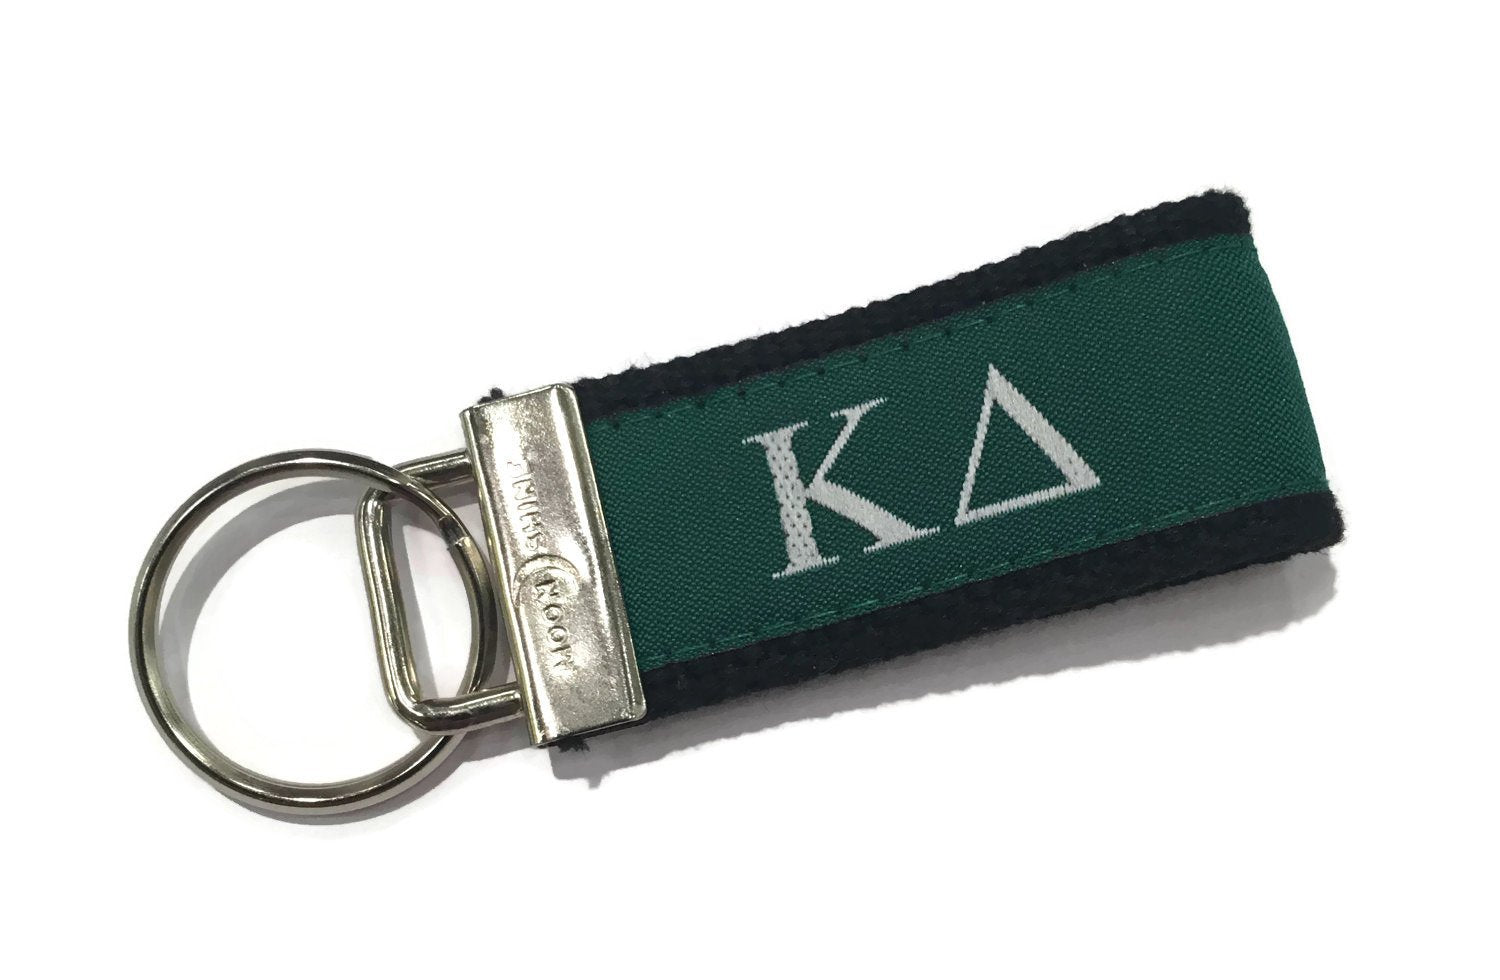 Greek Letter Kapa Delta Sorority Web Key Chain Fob.  Officially Licensed Greek Accessories.